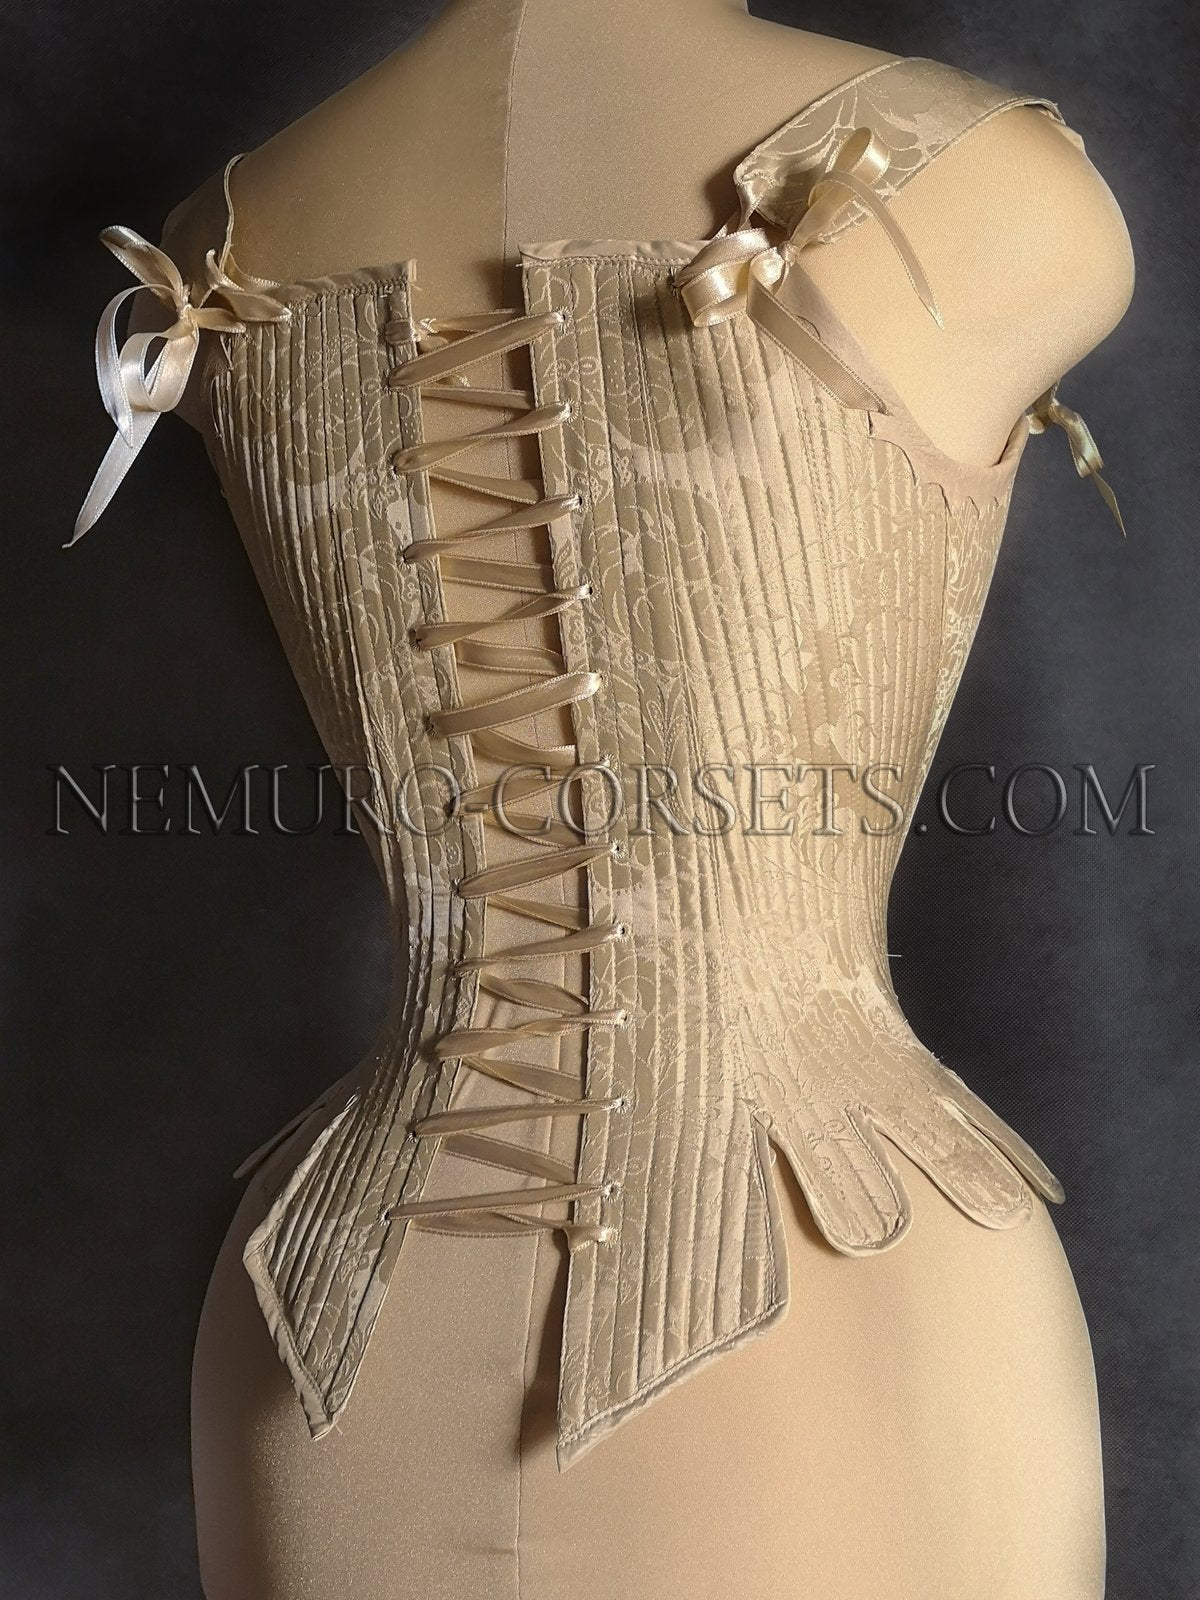 18th century fully boned stays corset - Custom at Nemuro-Corsets